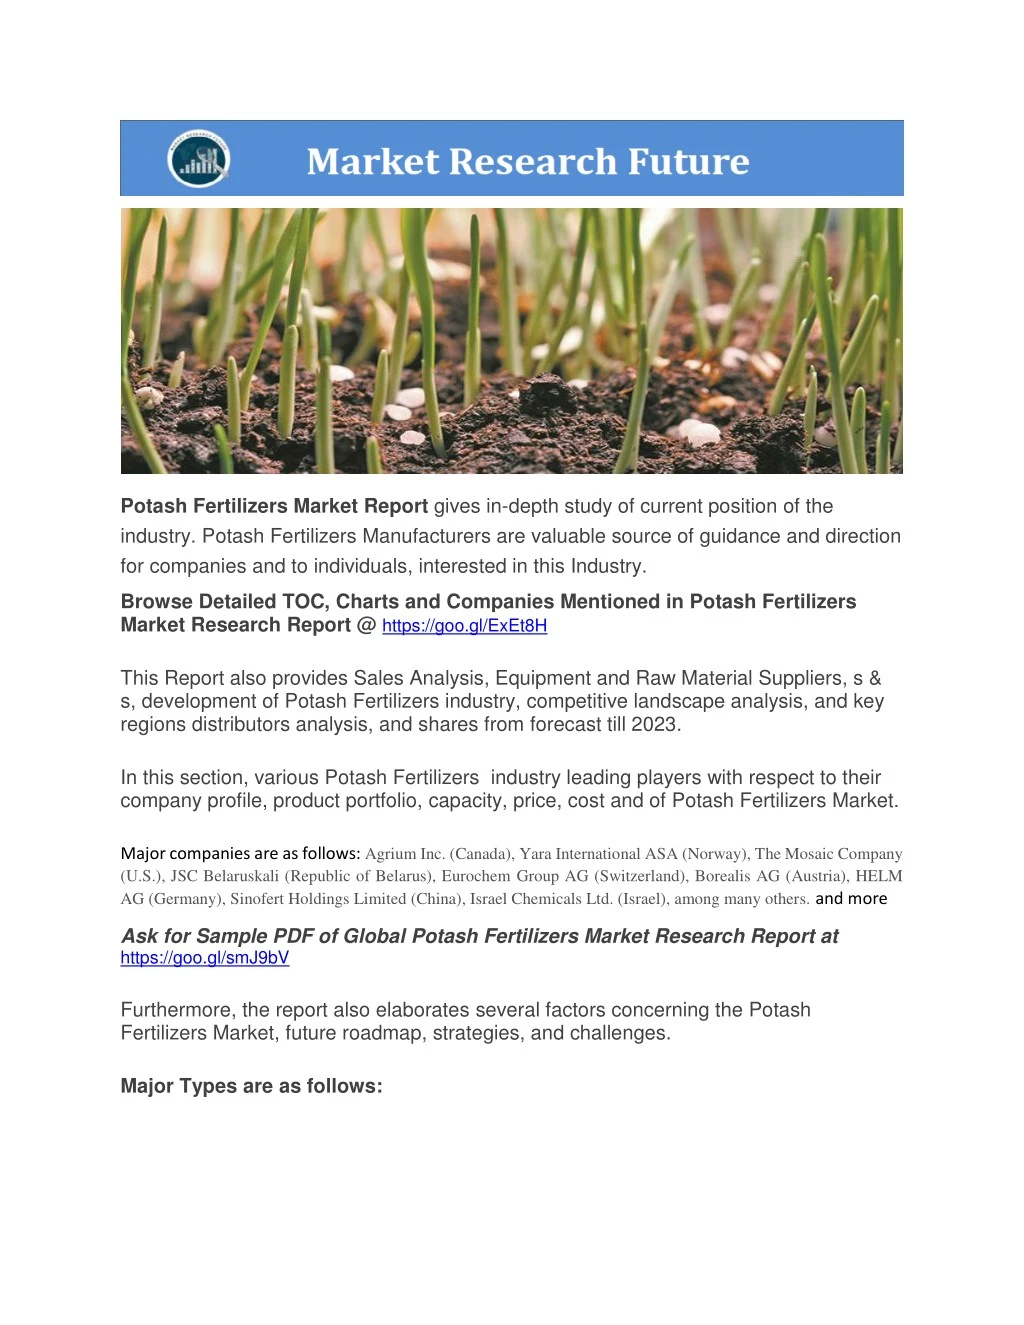 potash fertilizers market report gives in depth